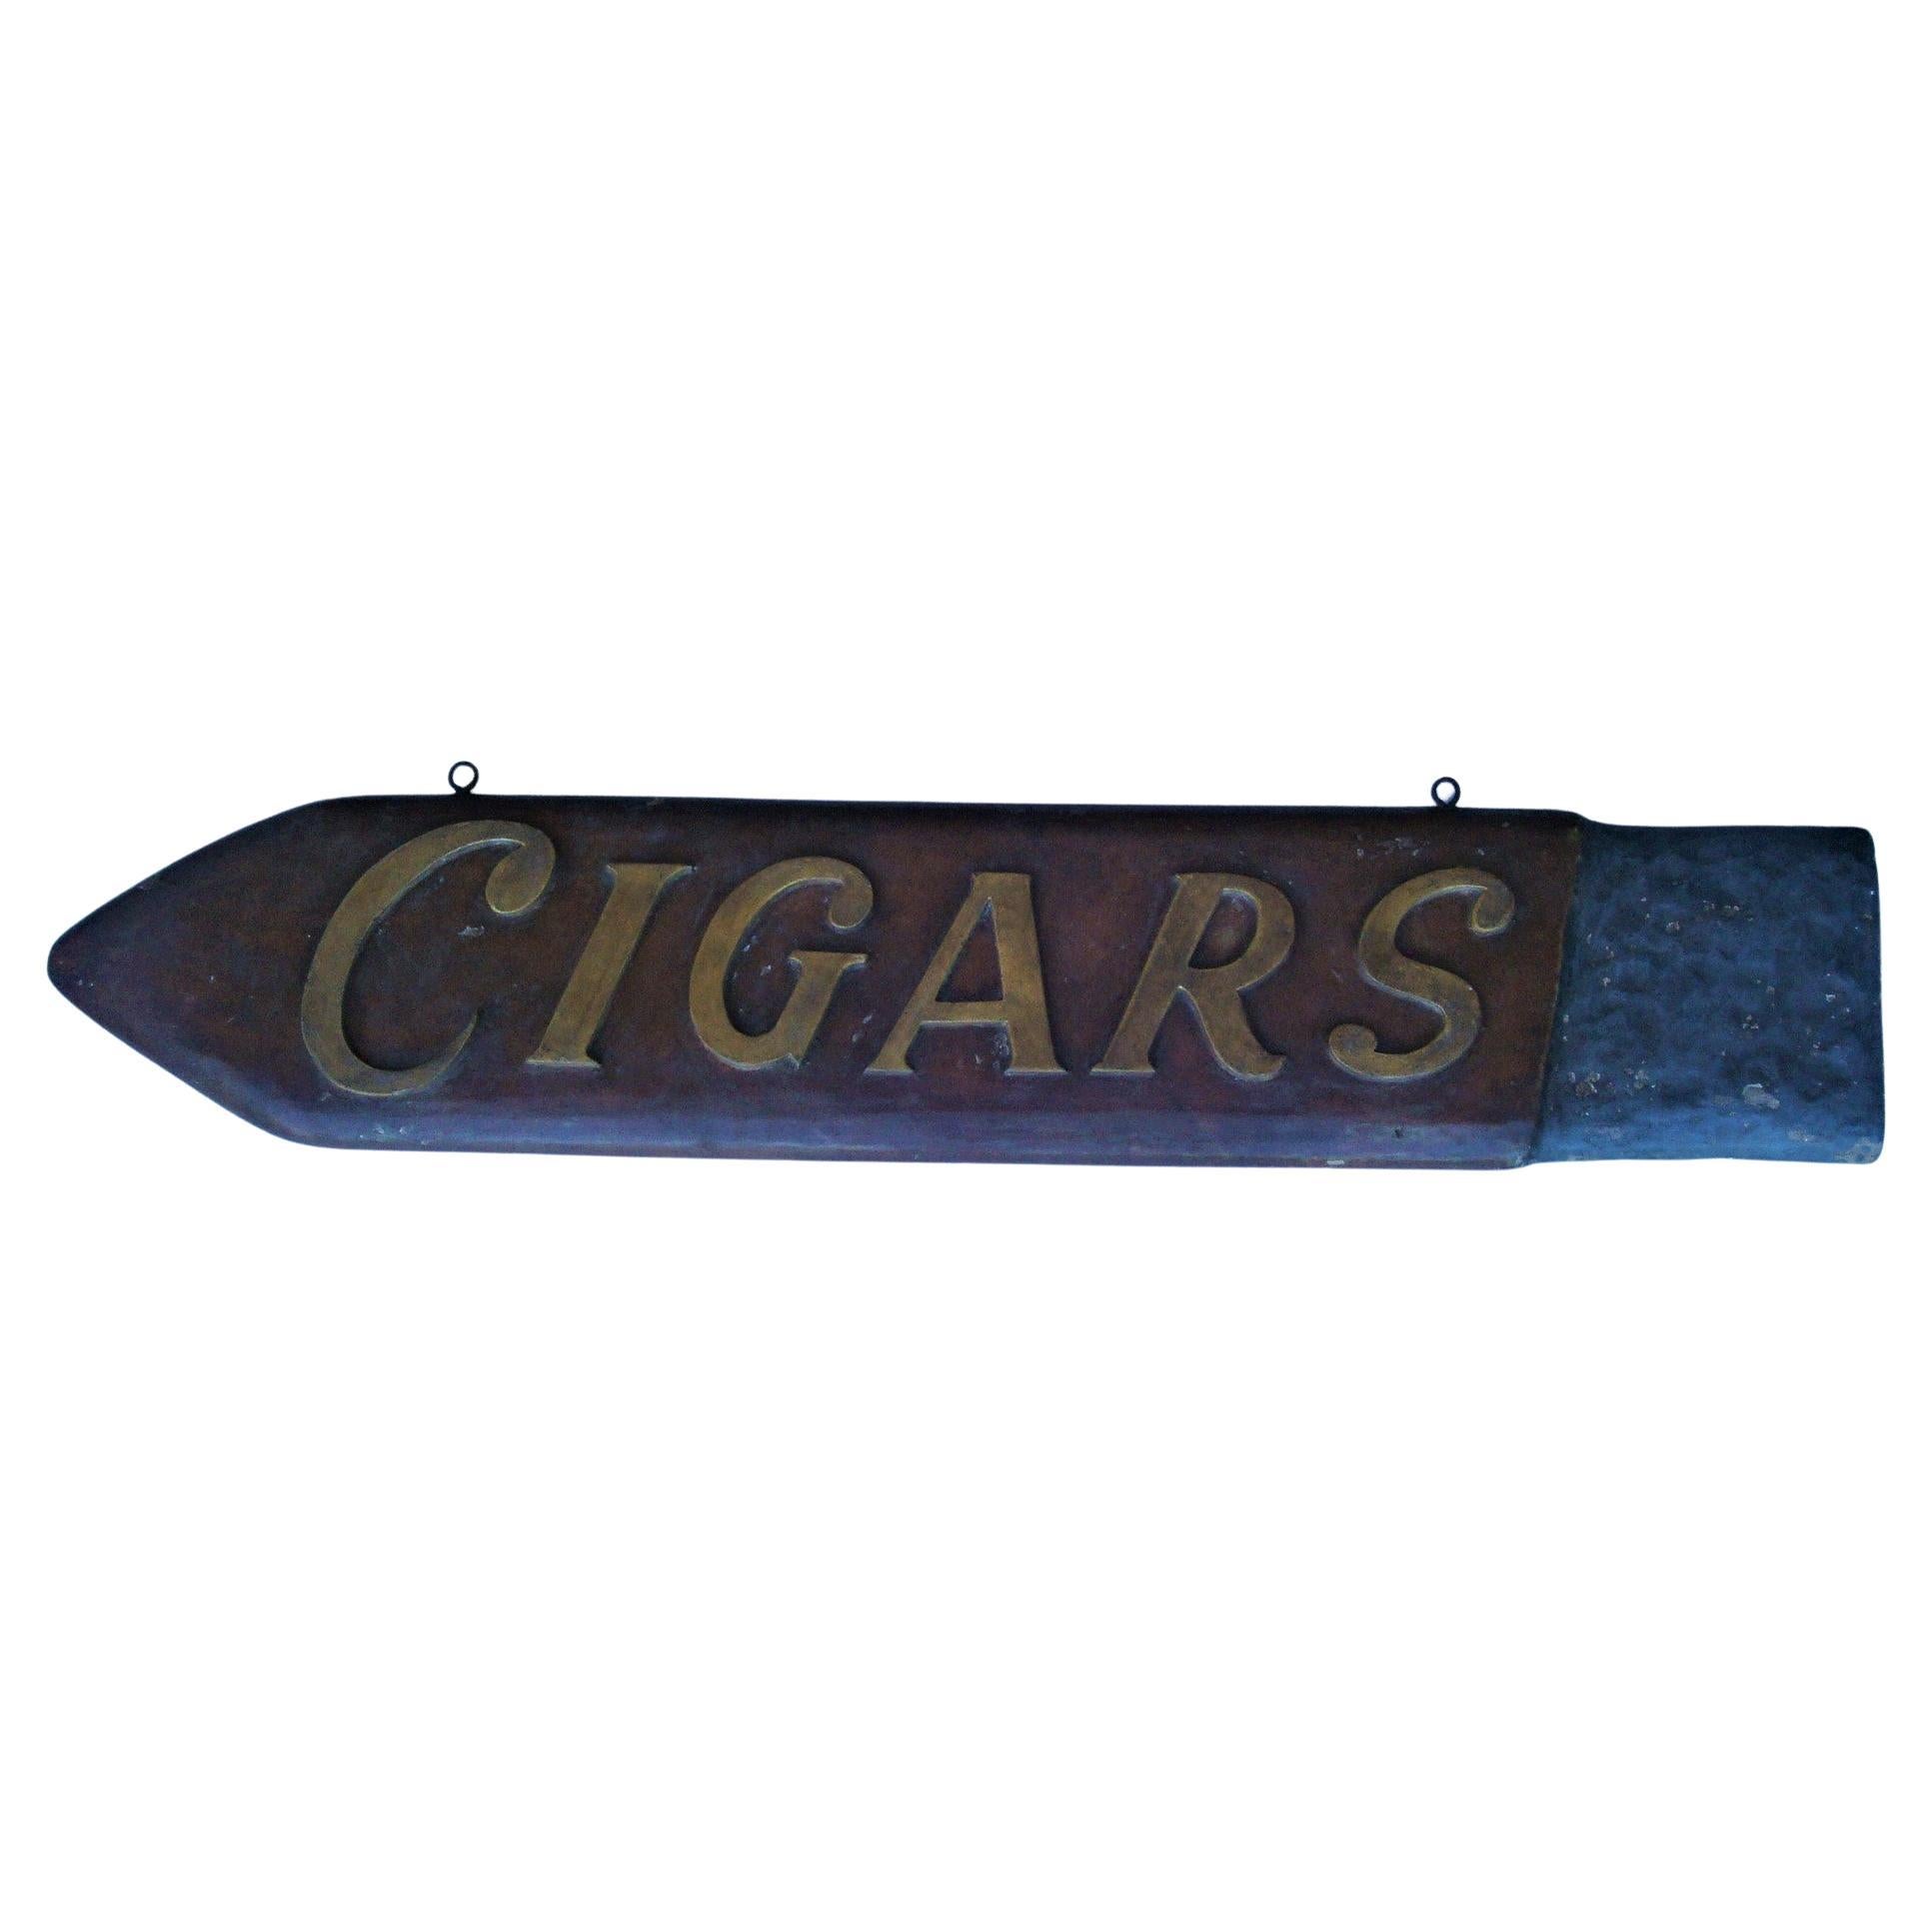 Cigars Store / Trade Folk Art Wooden Carved Sign. c 1900